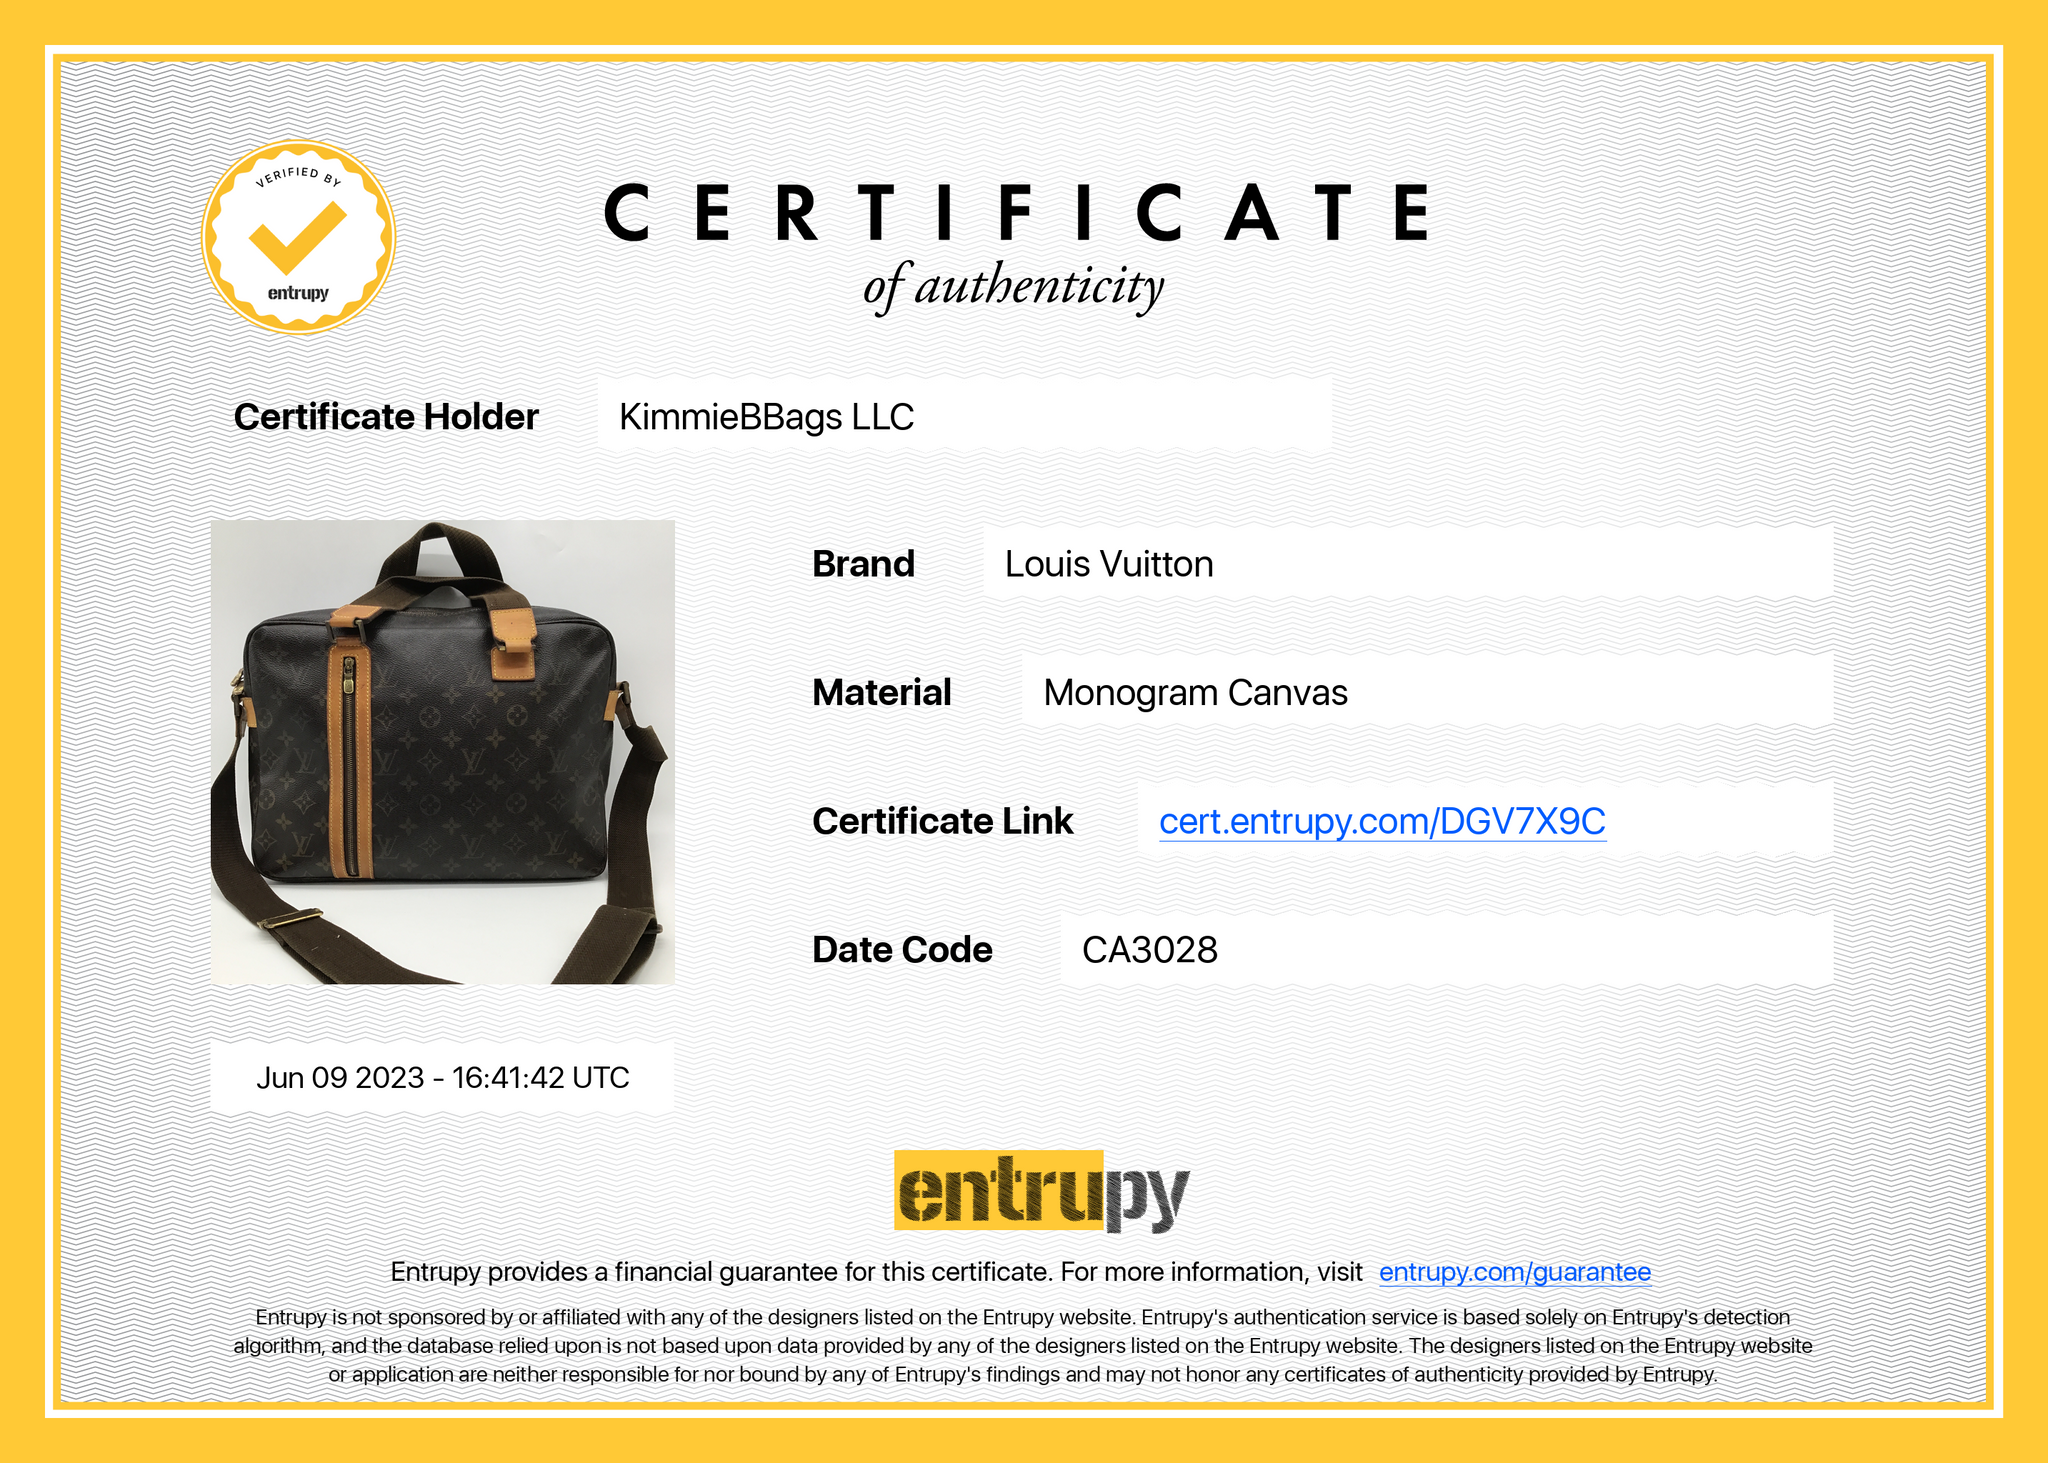 PRELOVED Louis Vuitton Damier Graphite Garment Bag GWXY329 041223 - $400  OFF DEAL